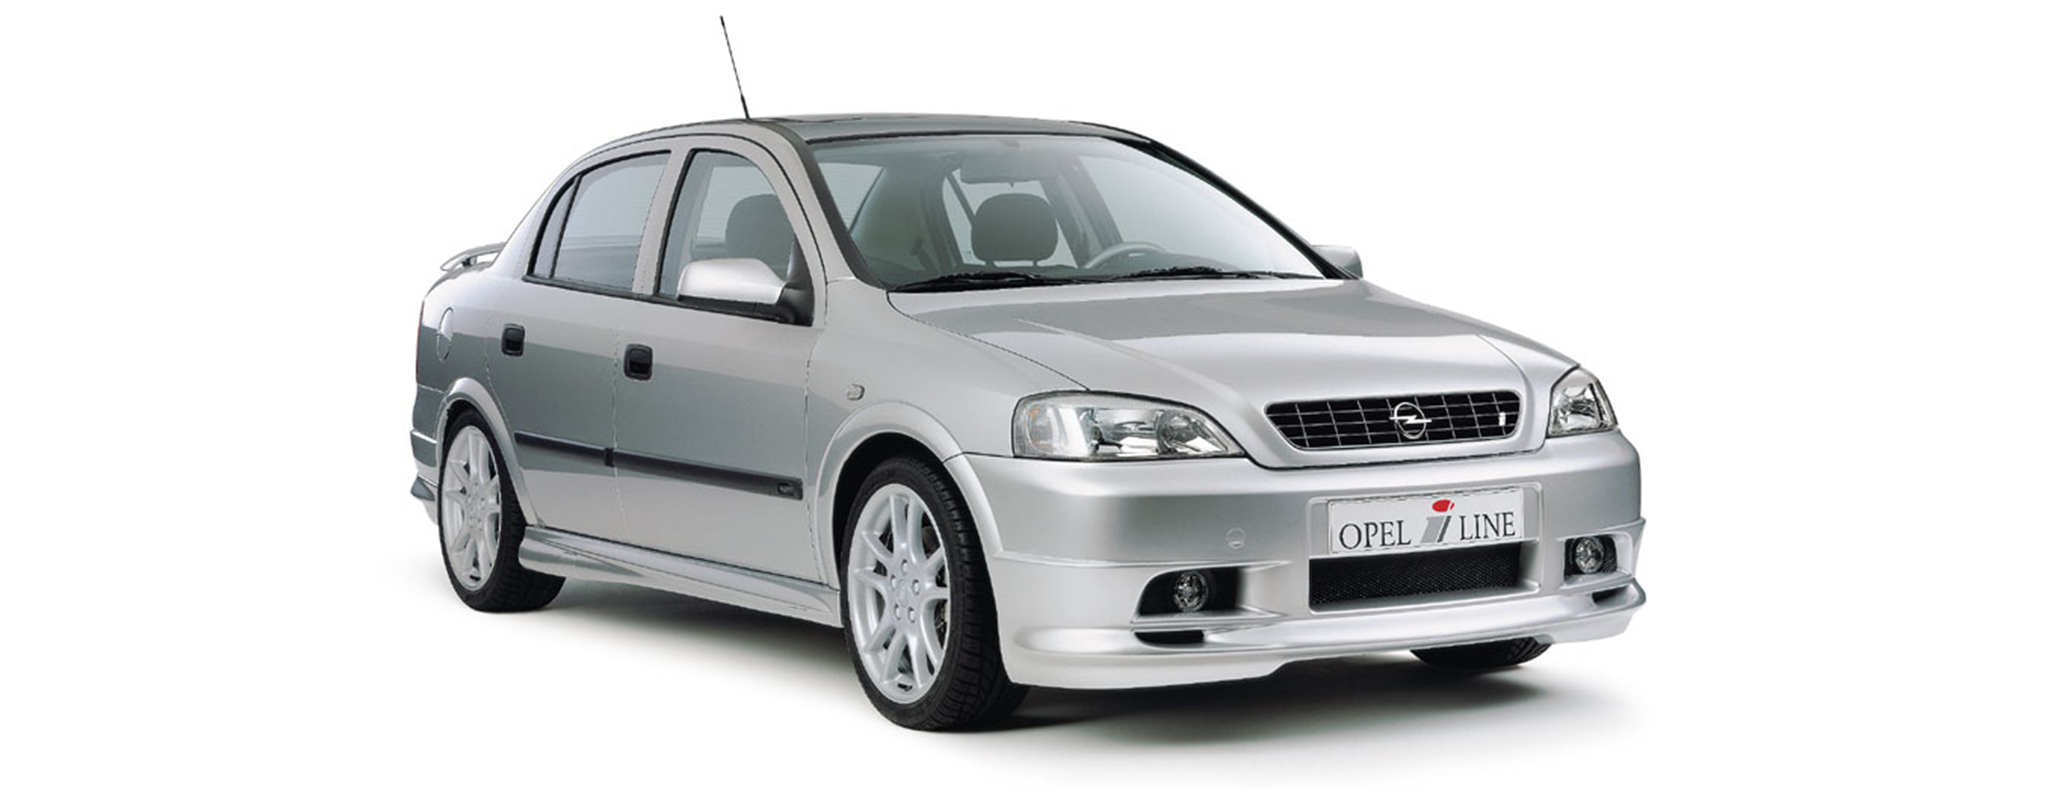 Opel Astra G, Tampón De 1998-2009, Aun, Dudak, Irmscher, Estilo